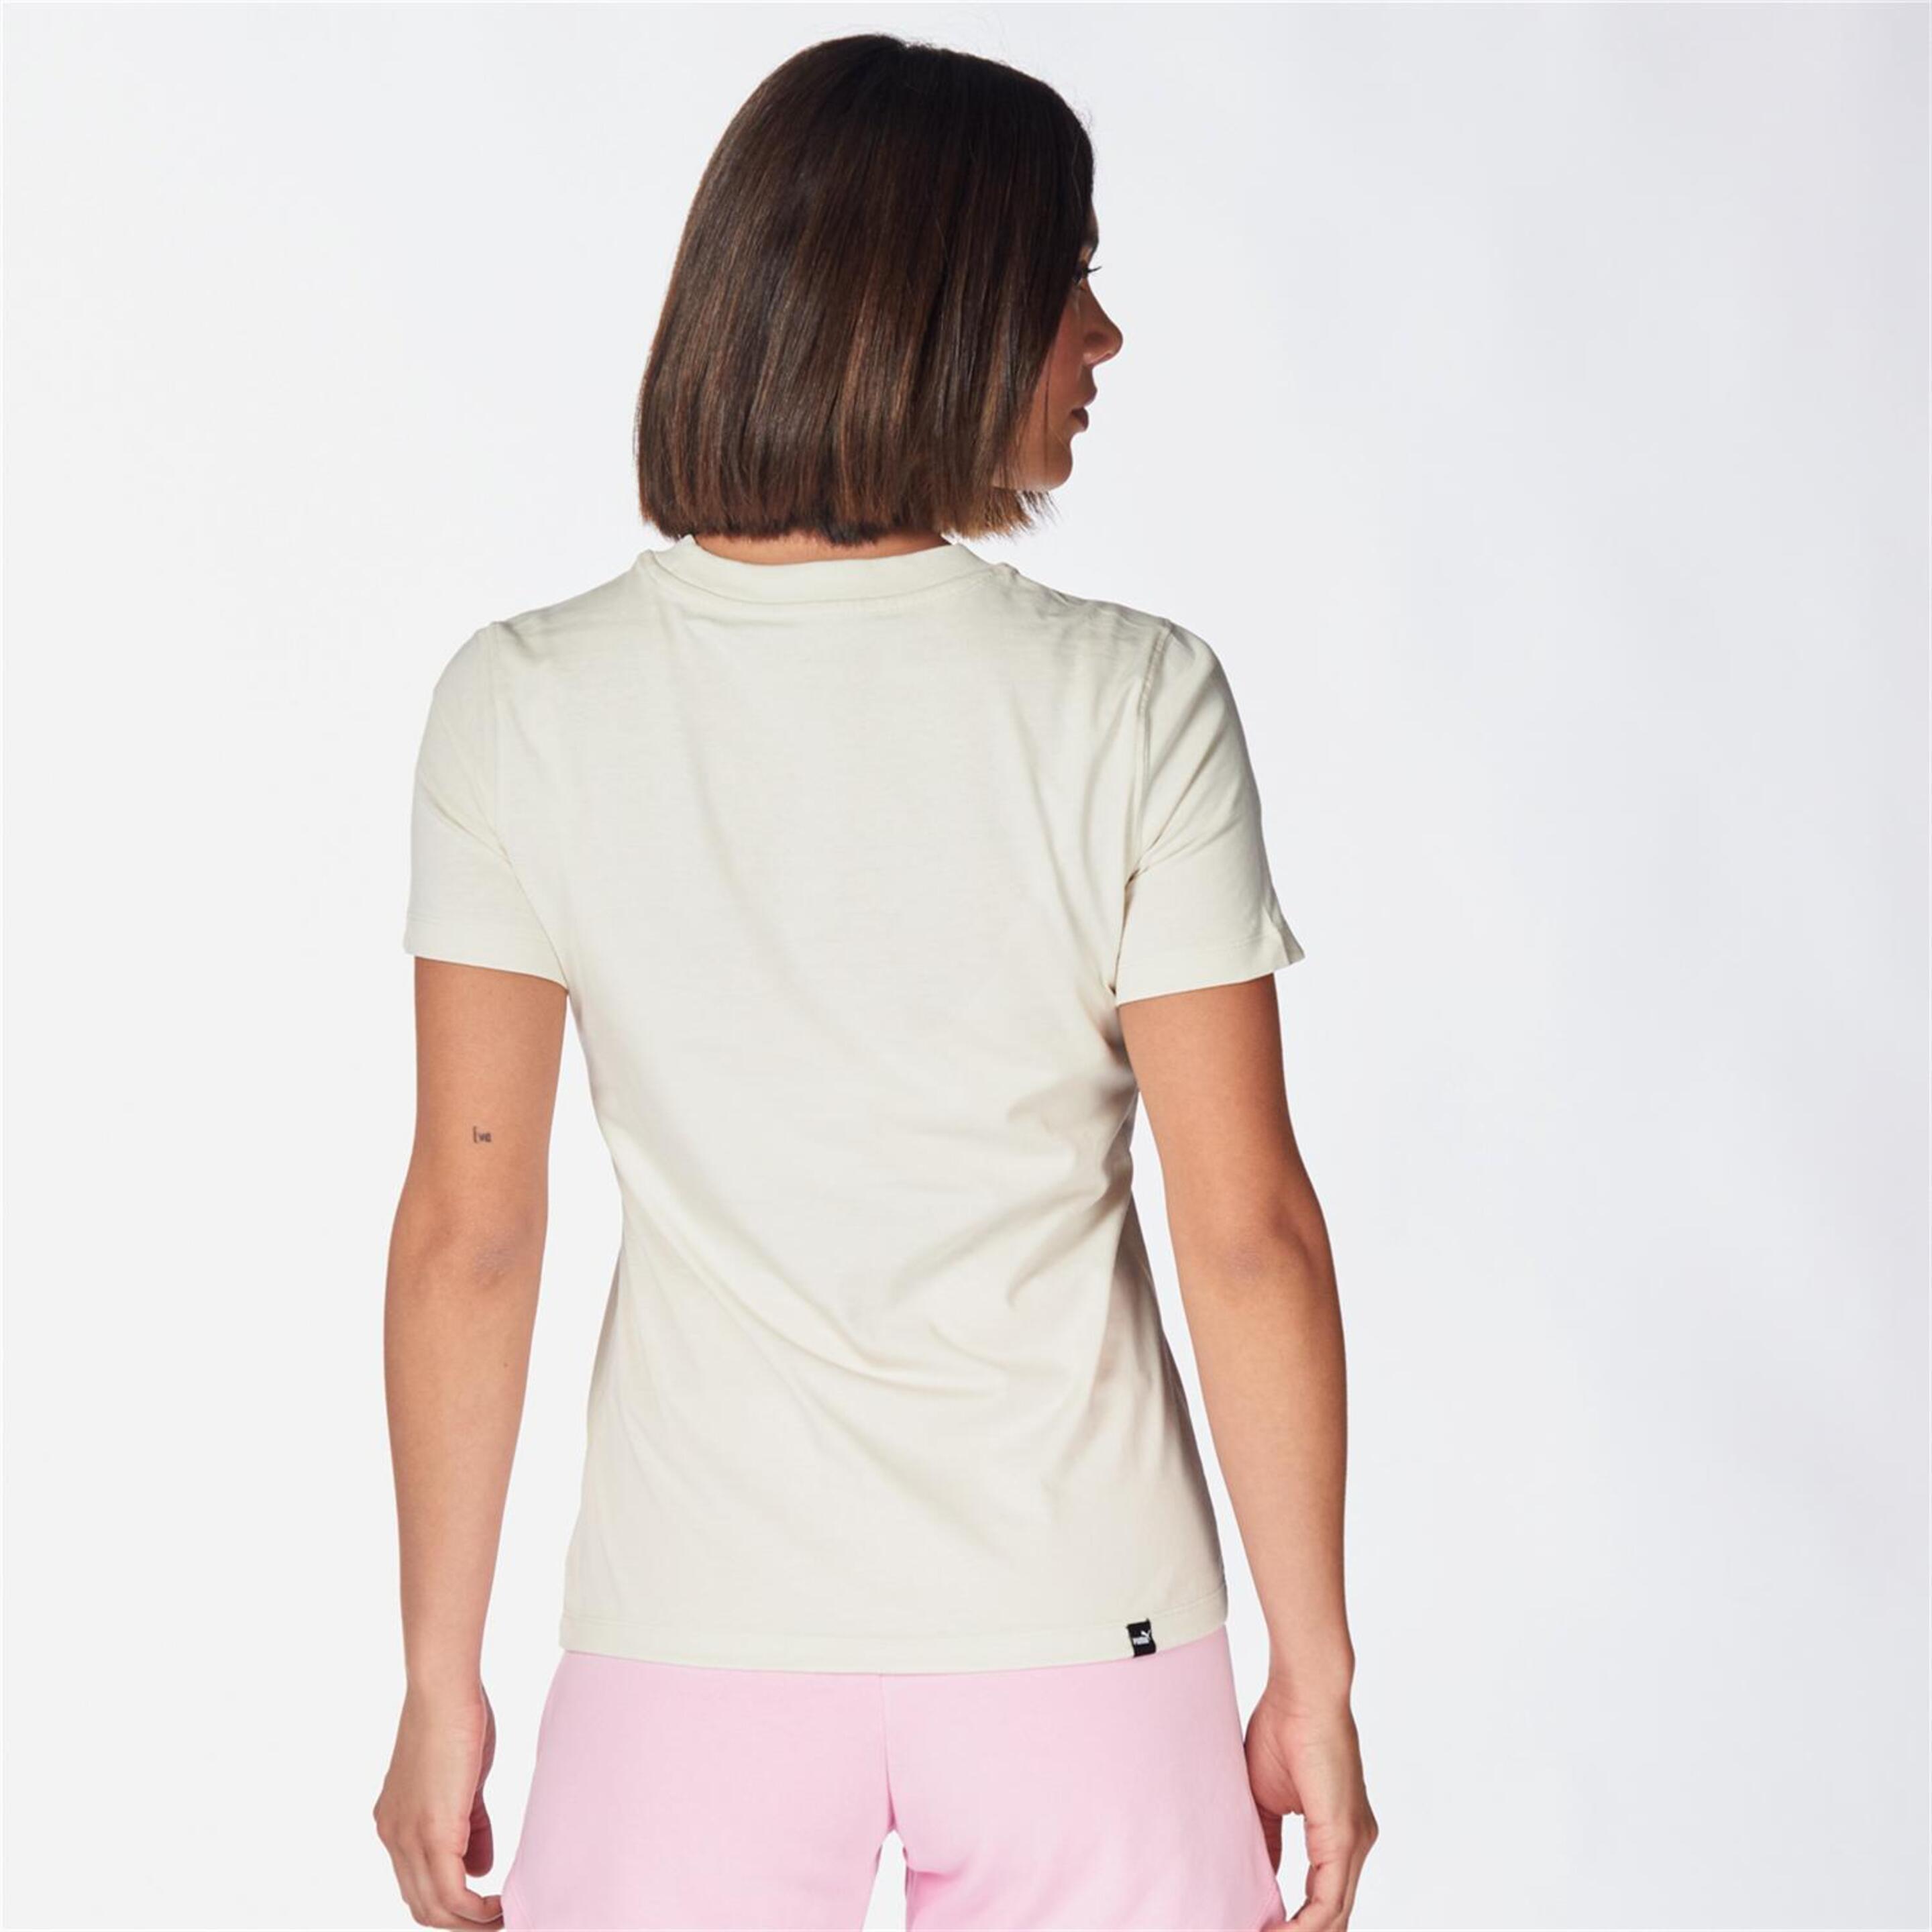 Puma Her - Marrón - Camiseta Mujer